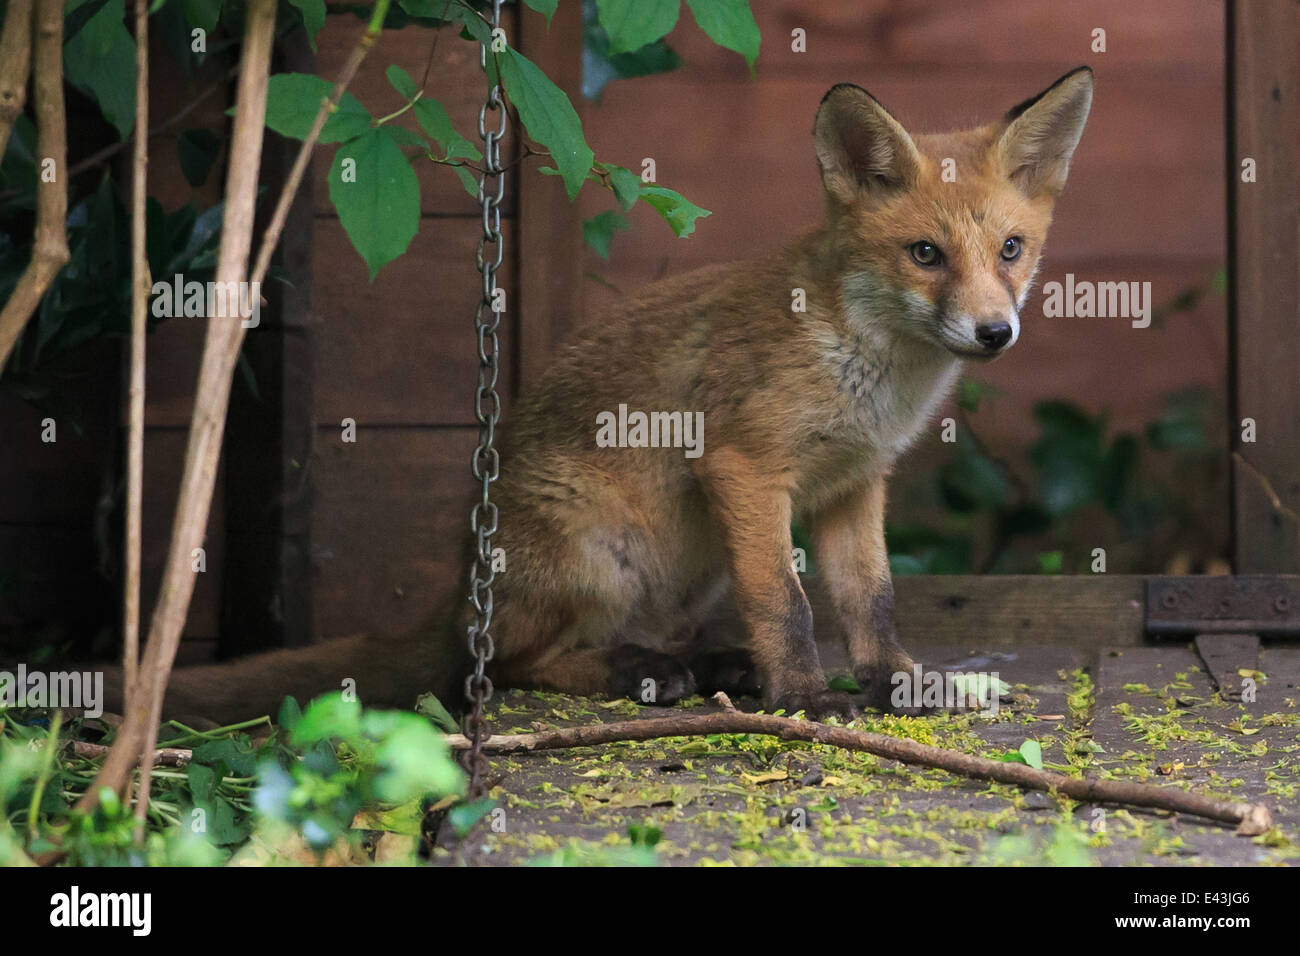 Jardin de Londres fox cub Banque D'Images